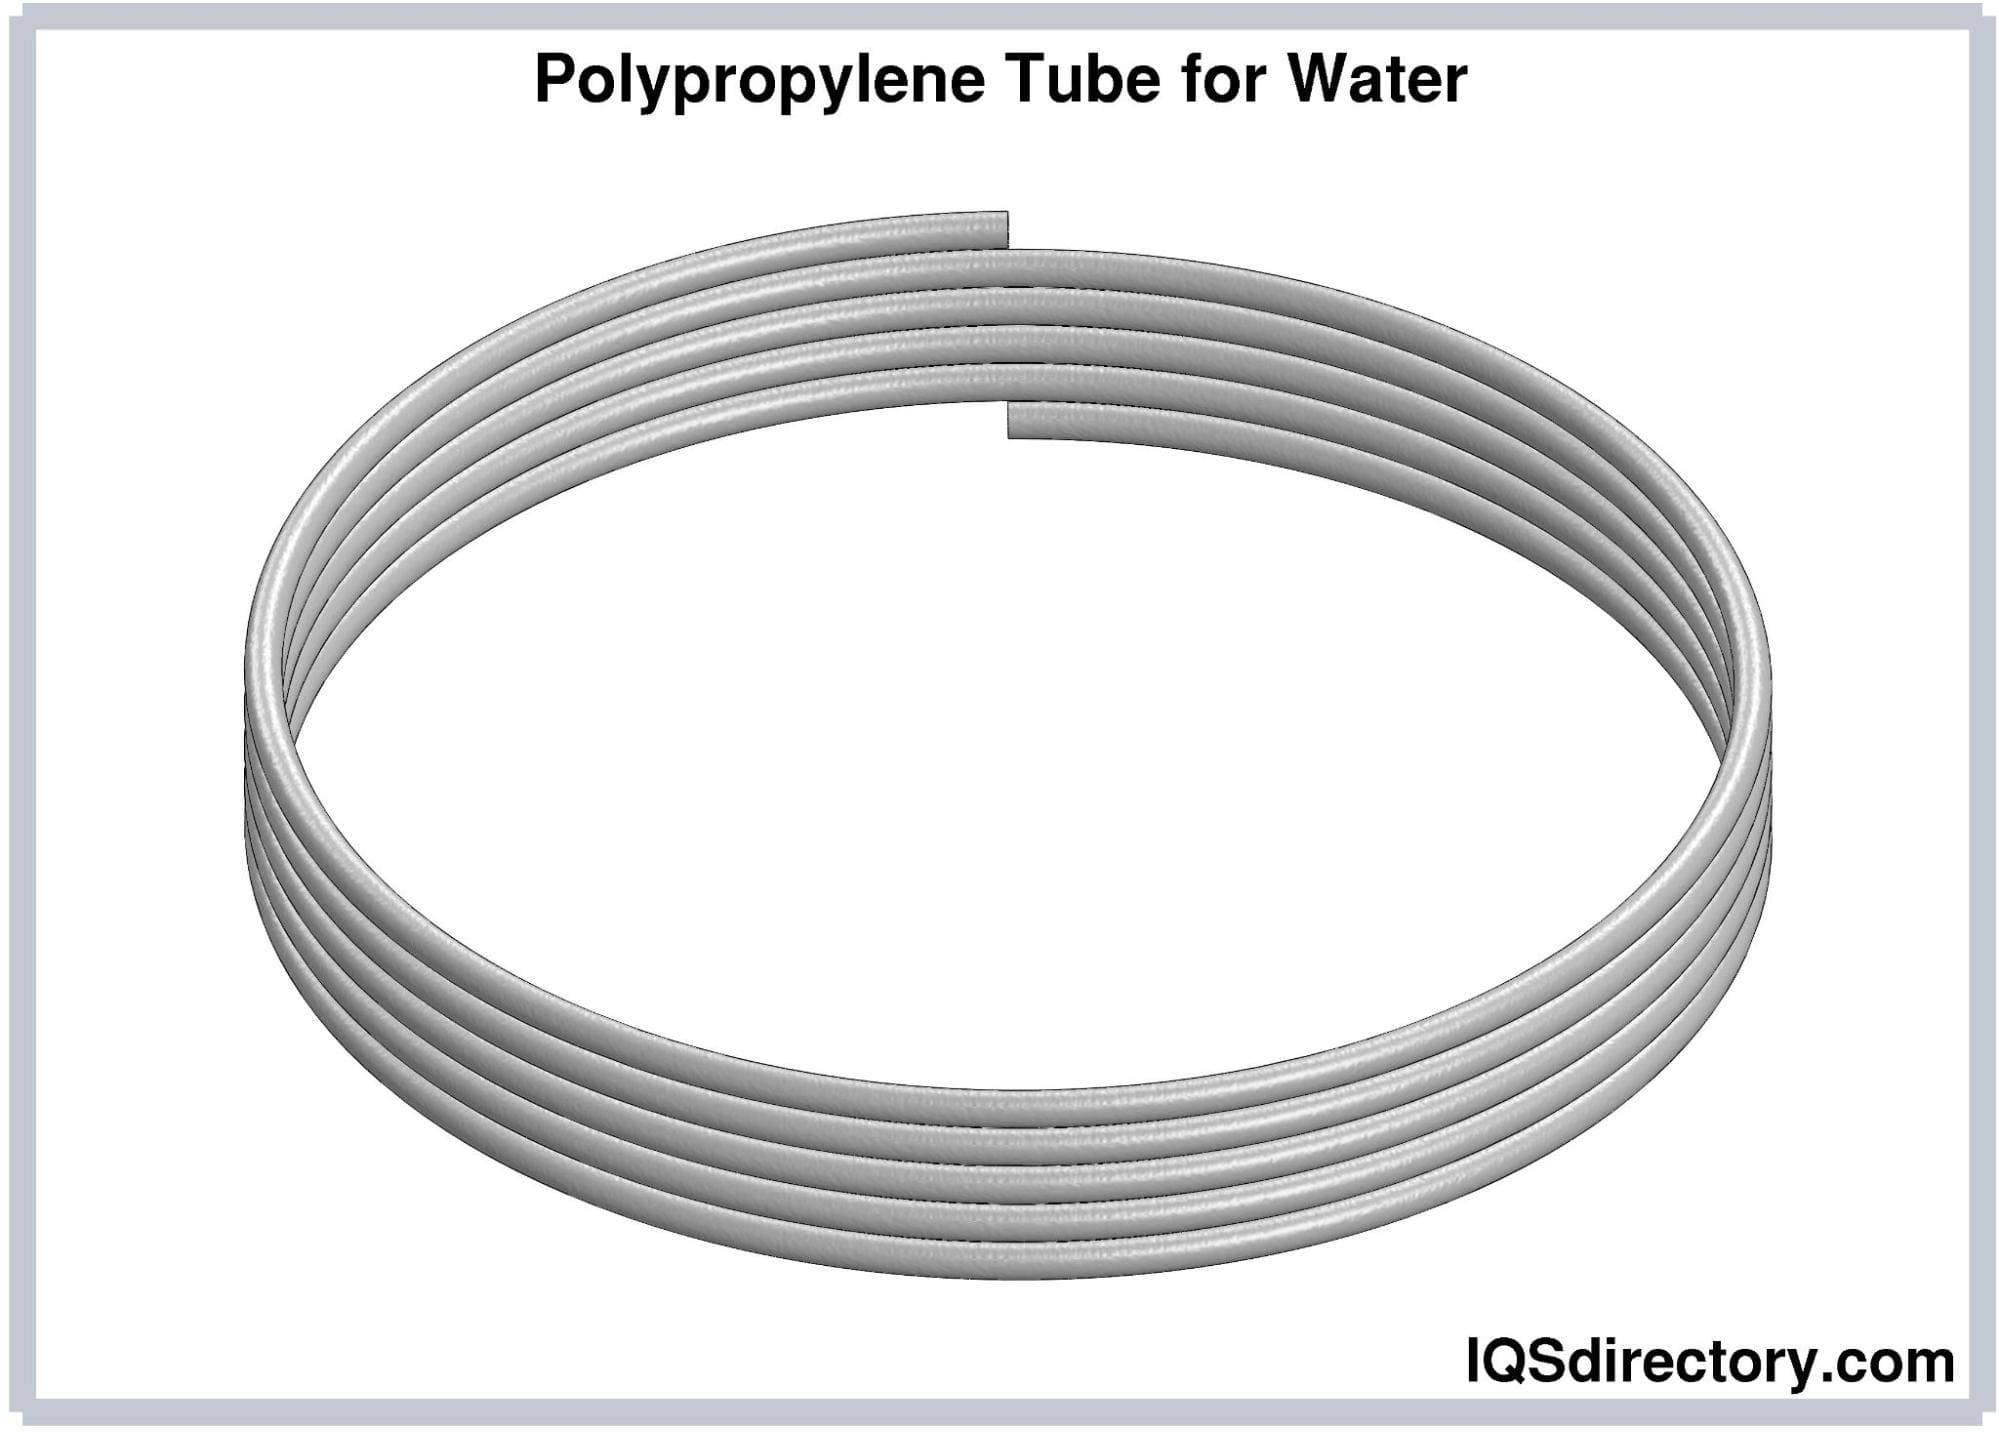 Polypropylene Tube for Water